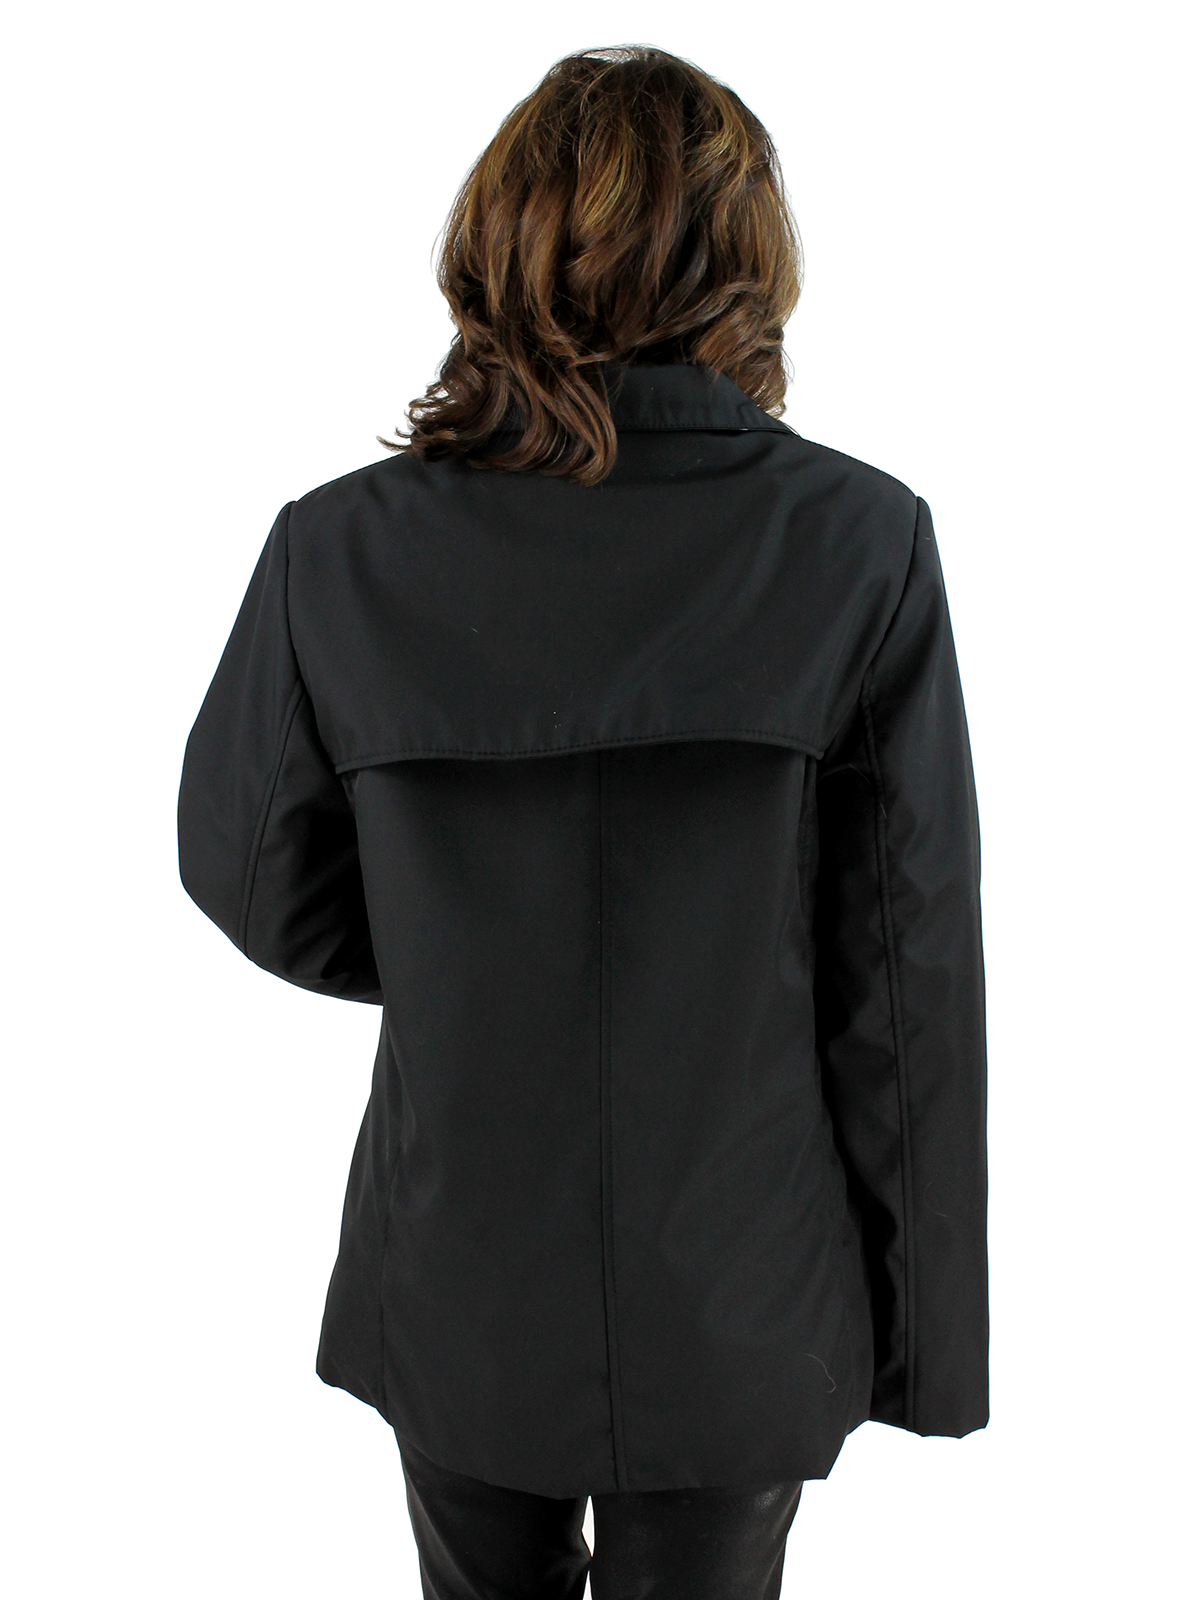 Microfiber Jacket - Women's Medium - Black | Estate Furs